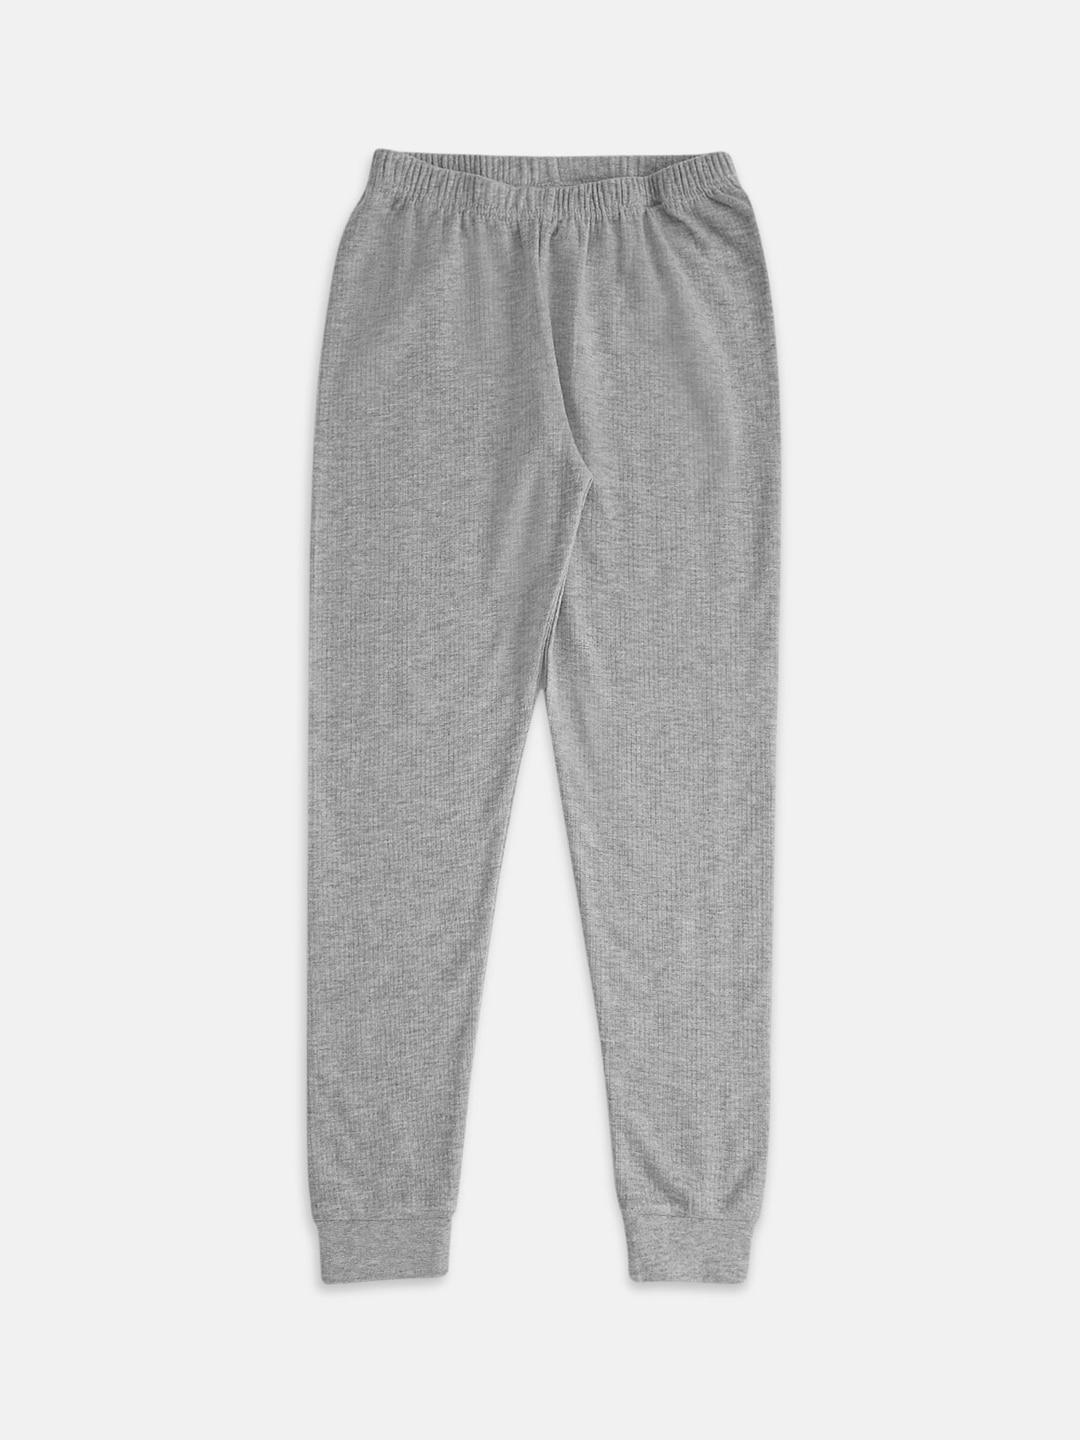 pantaloons junior boys grey melange solid thermal bottom